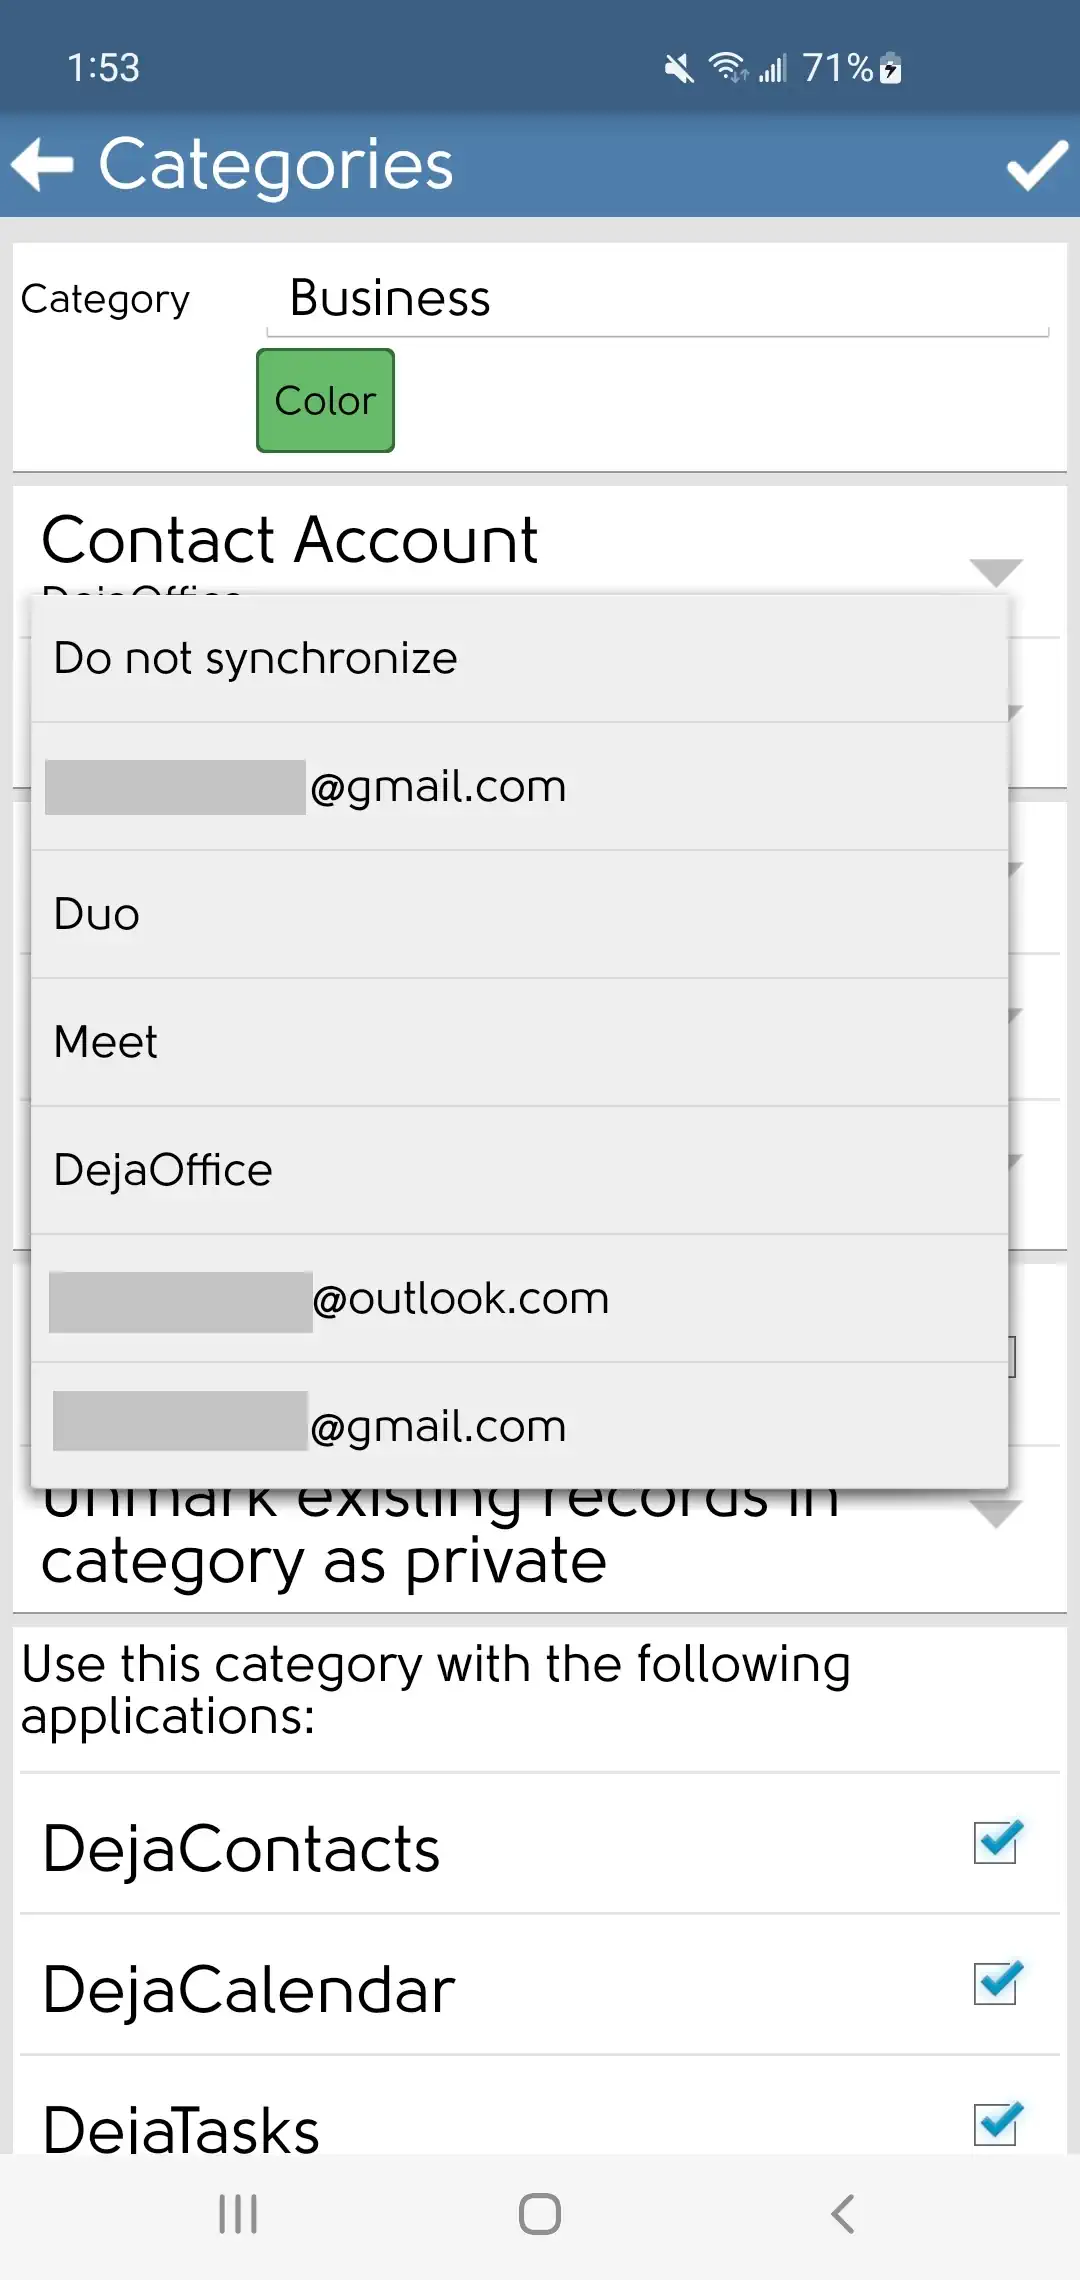 DejaOffice categorie contact account selectie